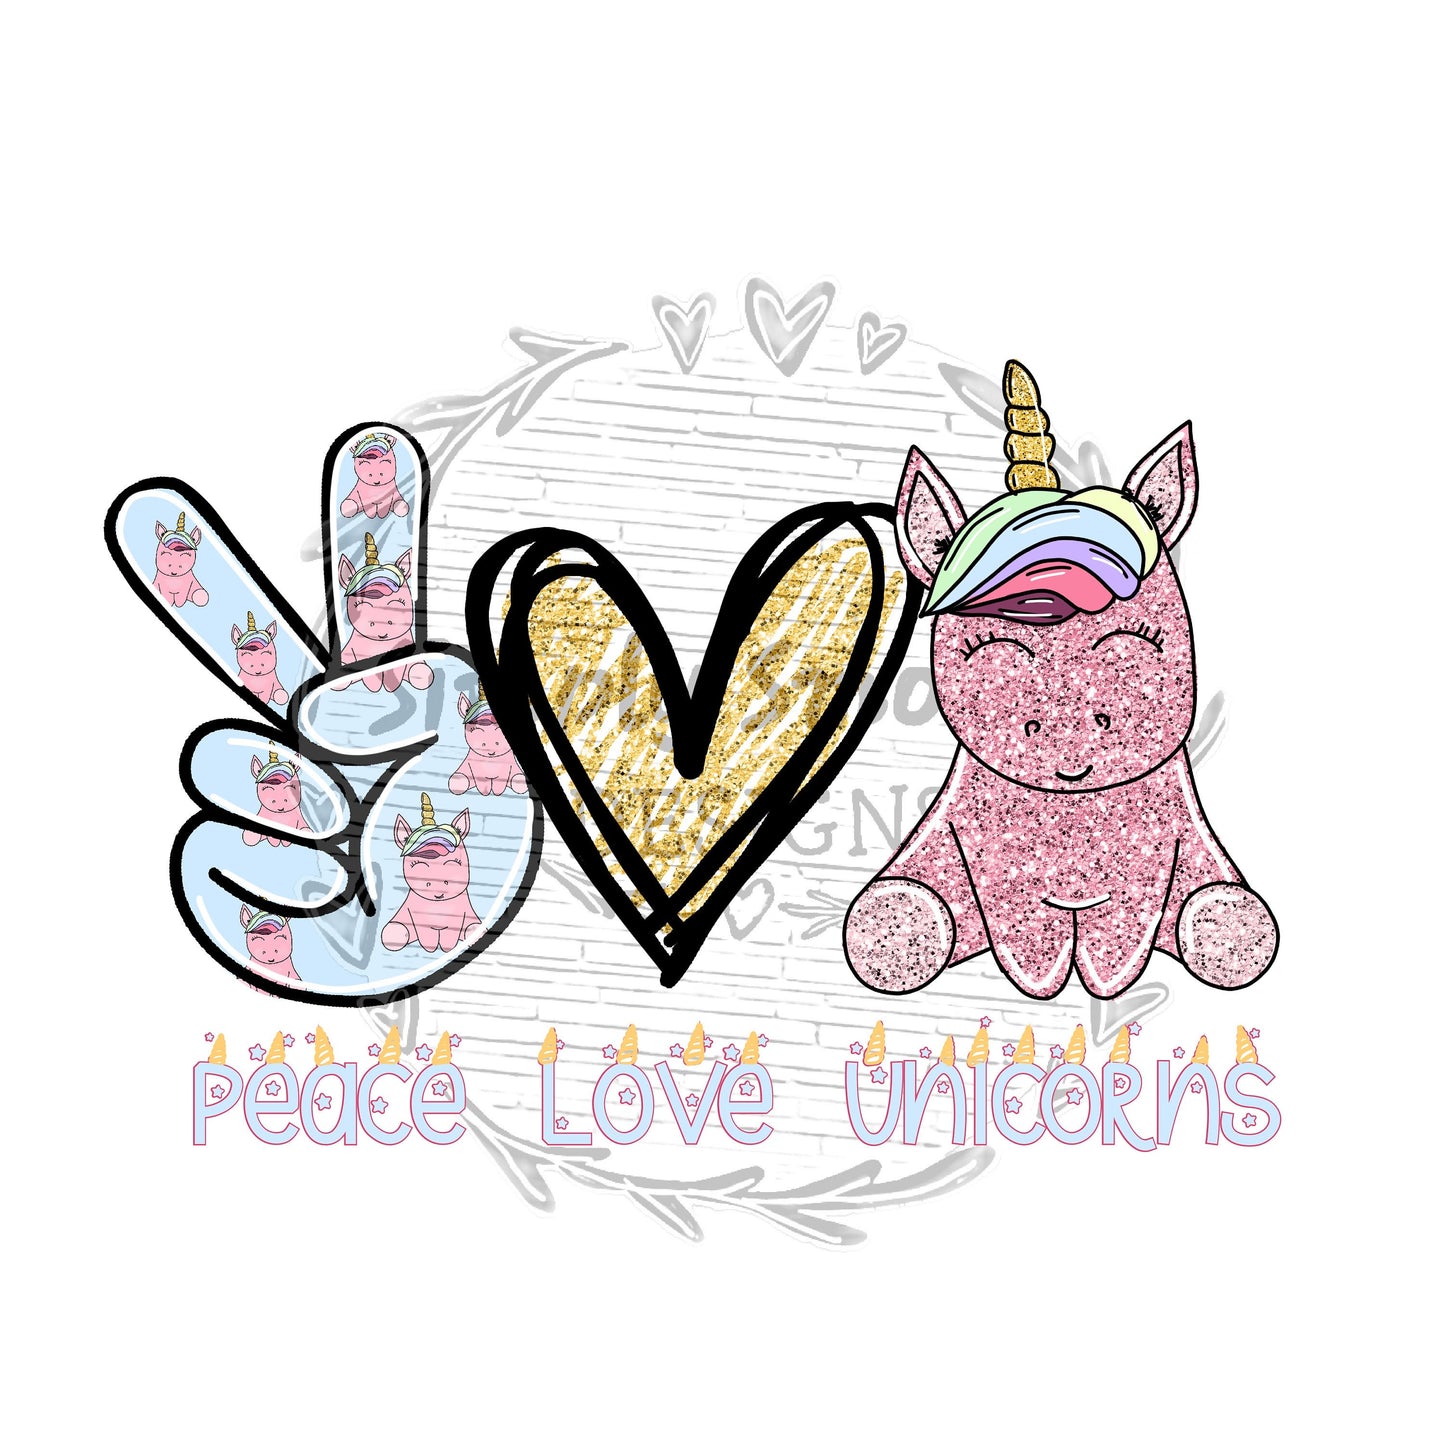 Peace love unicorns